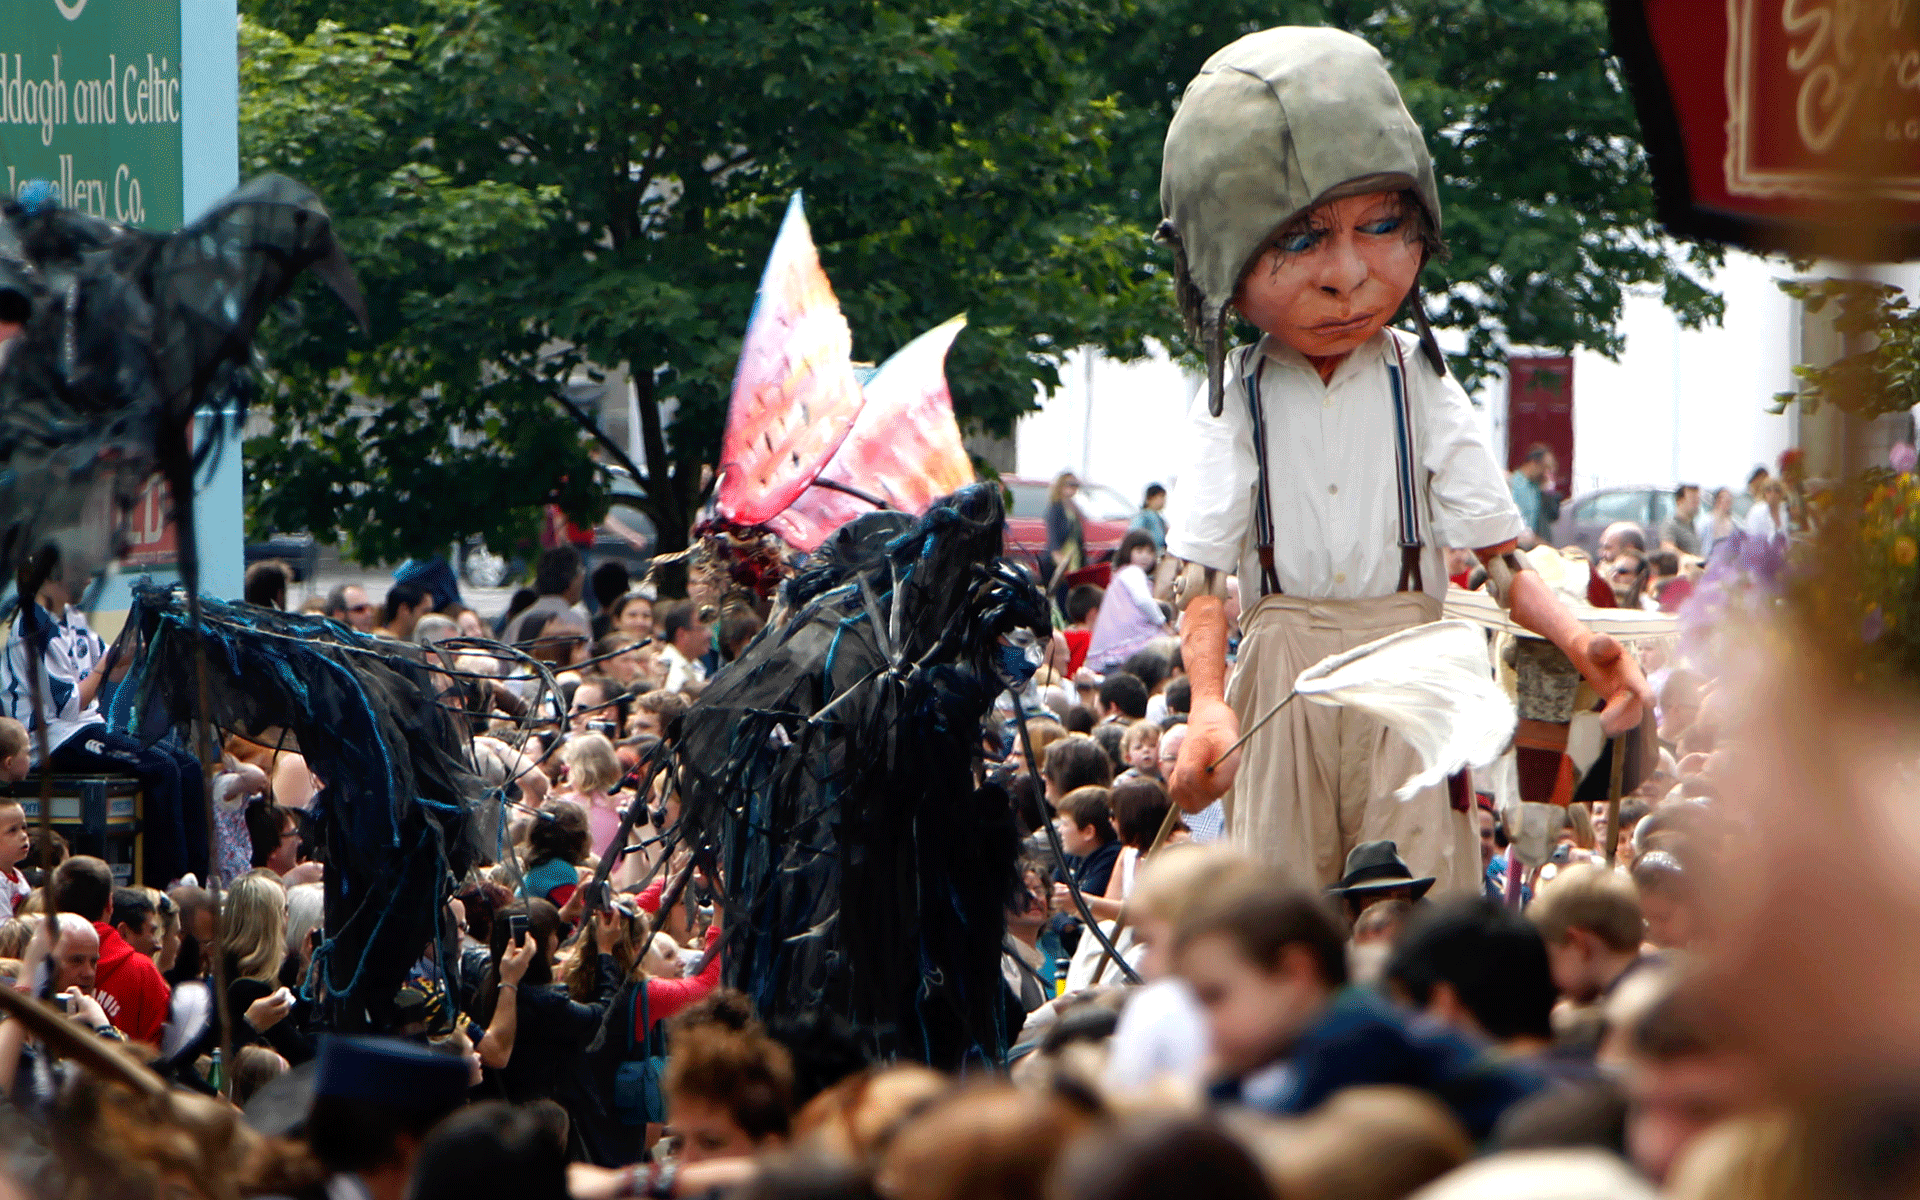 Galway Arts Festival Parade, image Tourism Ireland